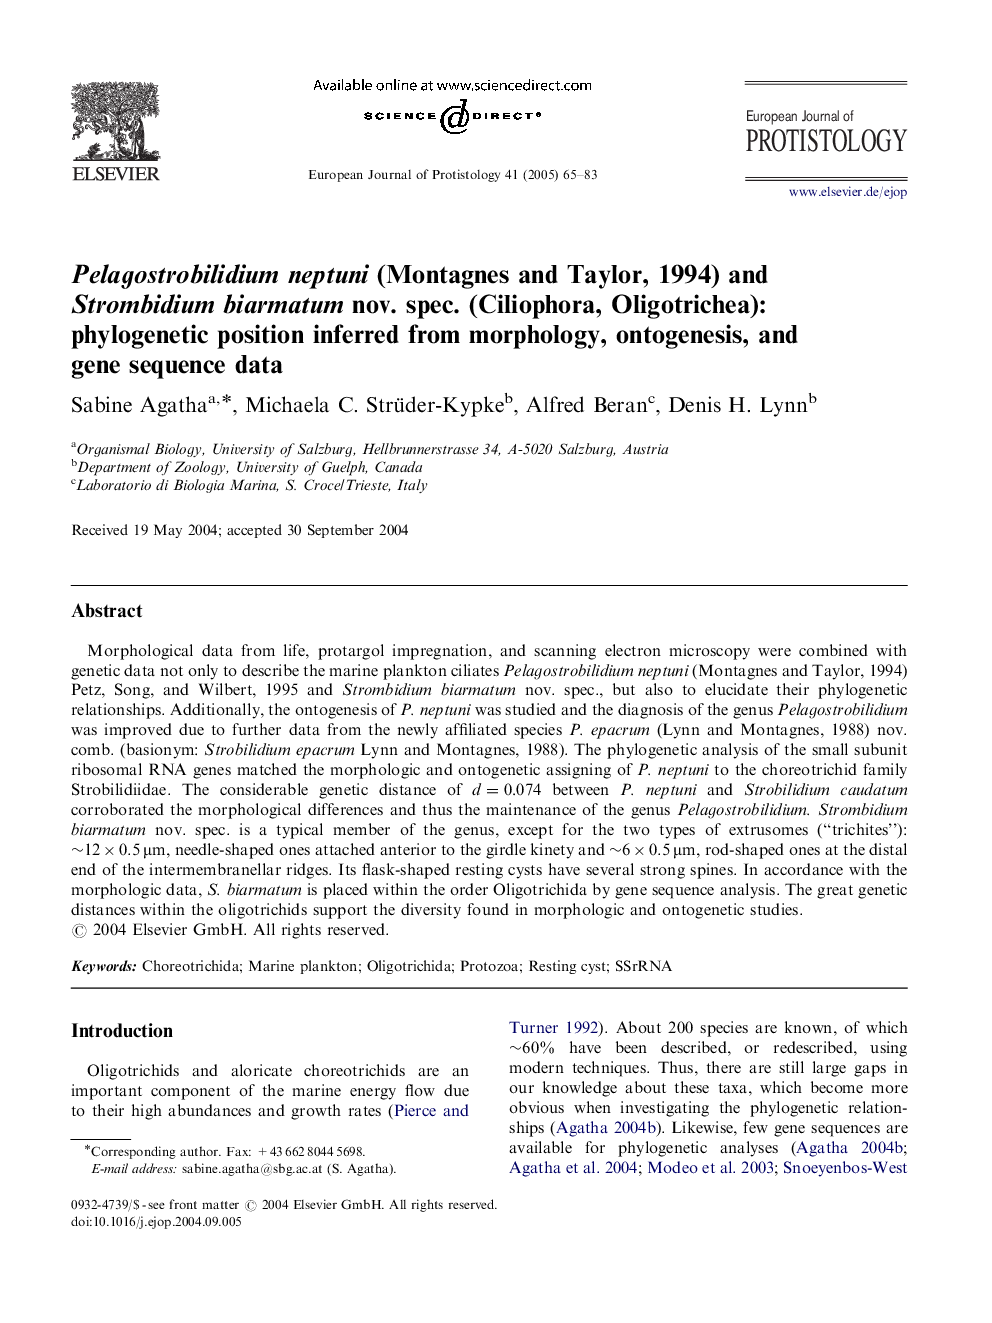 Pelagostrobilidium neptuni (Montagnes and Taylor, 1994) and Strombidium biarmatum nov. spec. (Ciliophora, Oligotrichea): phylogenetic position inferred from morphology, ontogenesis, and gene sequence data